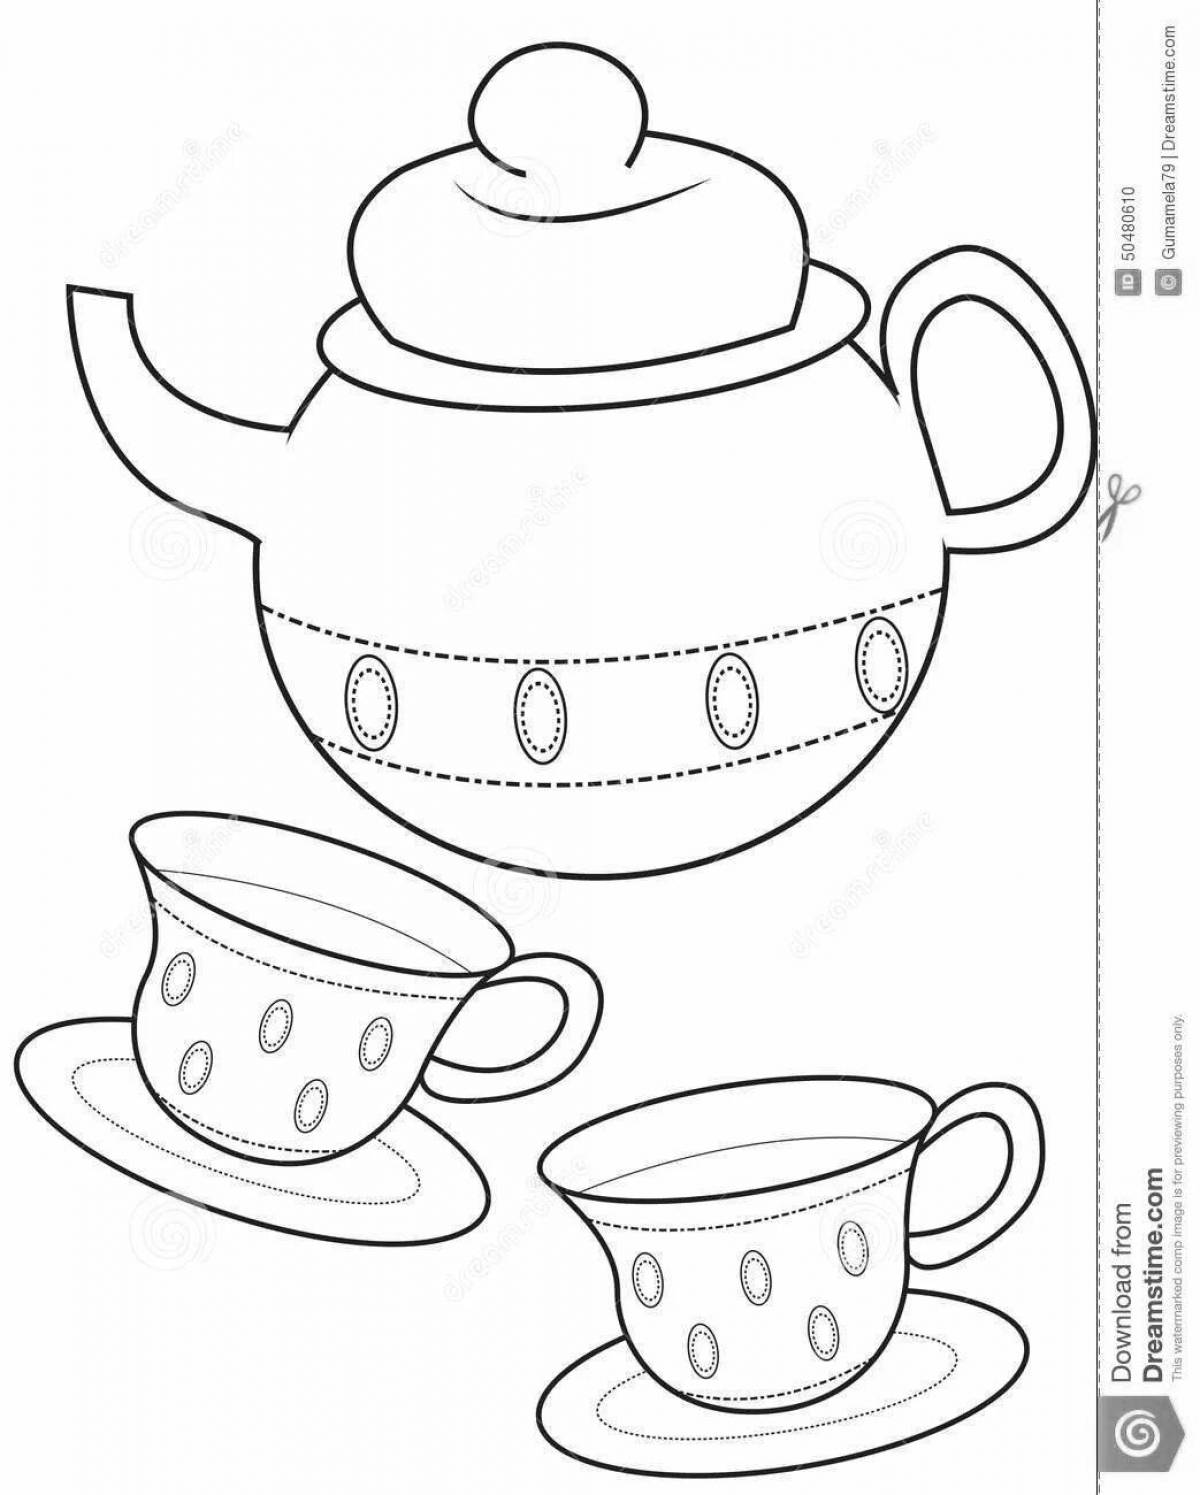 Amazing teapot and mug coloring book